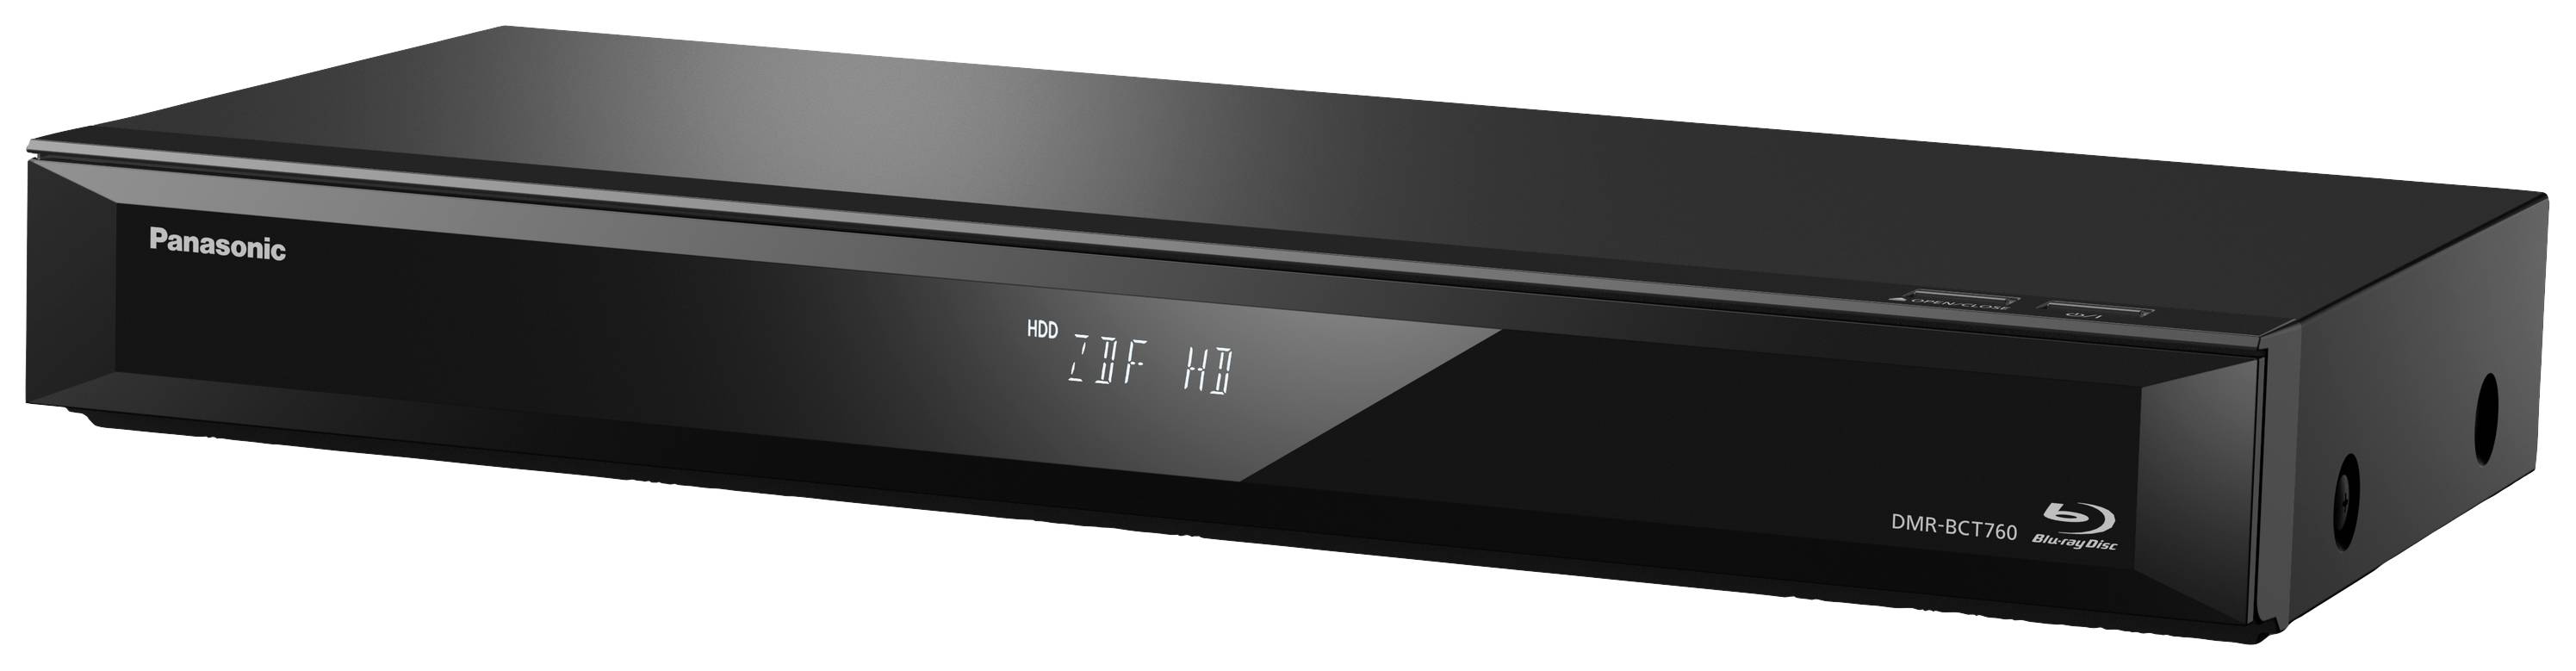 Blu-ray Electronic + Conrad player HDD tuner upscaling, Twin audio, HD CD recorder | High-res player, 4K GB Buy DVB-C DMR-BCT760AG Panasonic 500